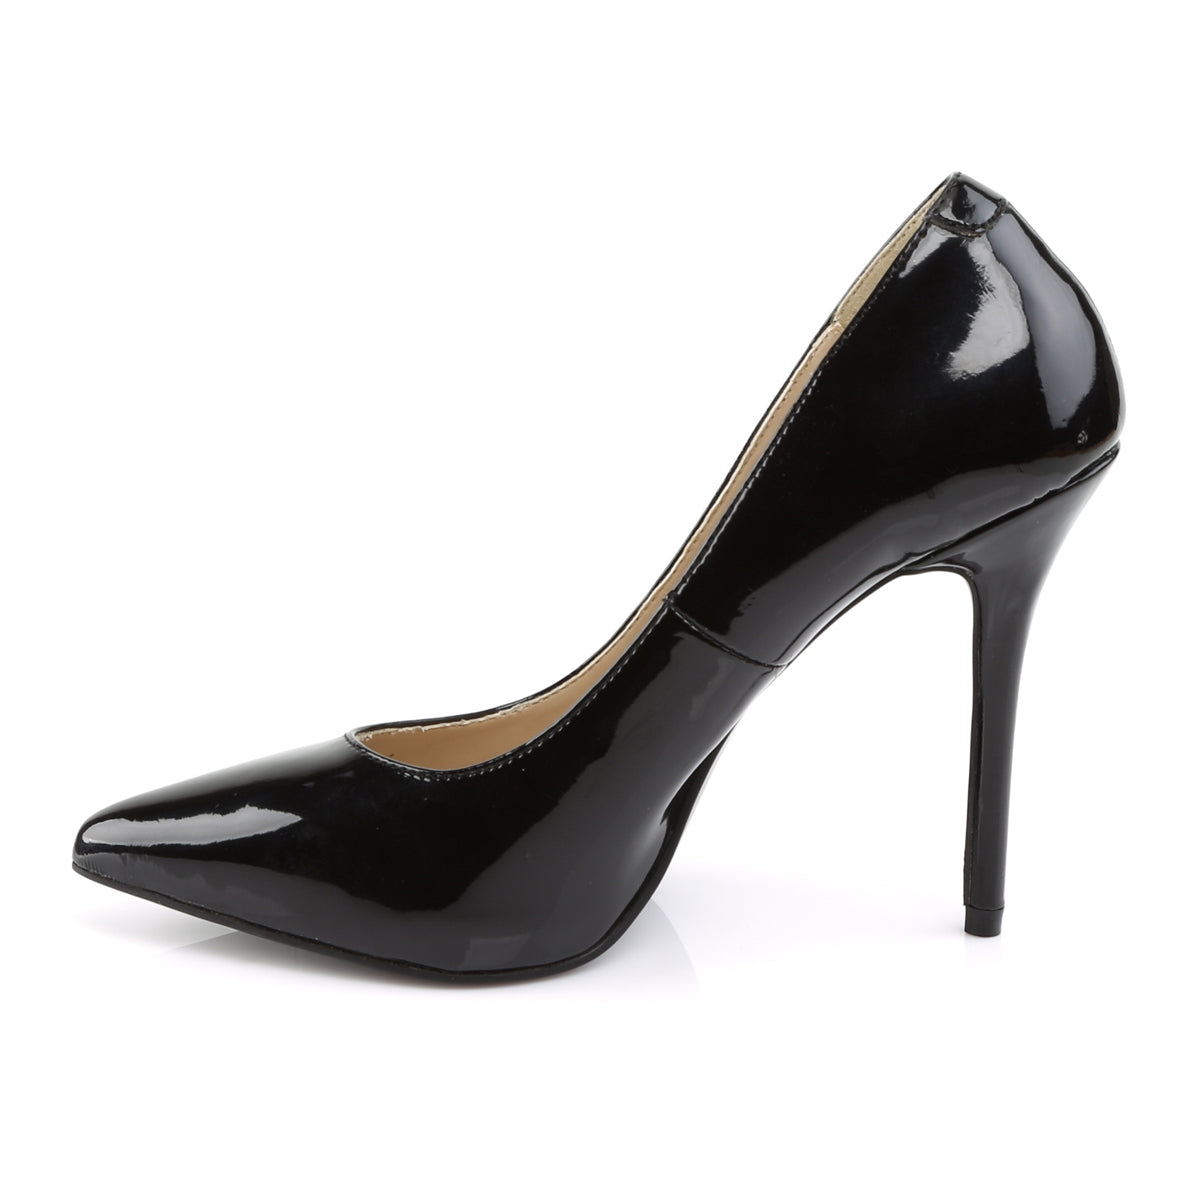 AMUSE-20 Pleaser Sexy 5" Heel Black Patent Fetish Footwear-Pleaser- Sexy Shoes Pole Dance Heels